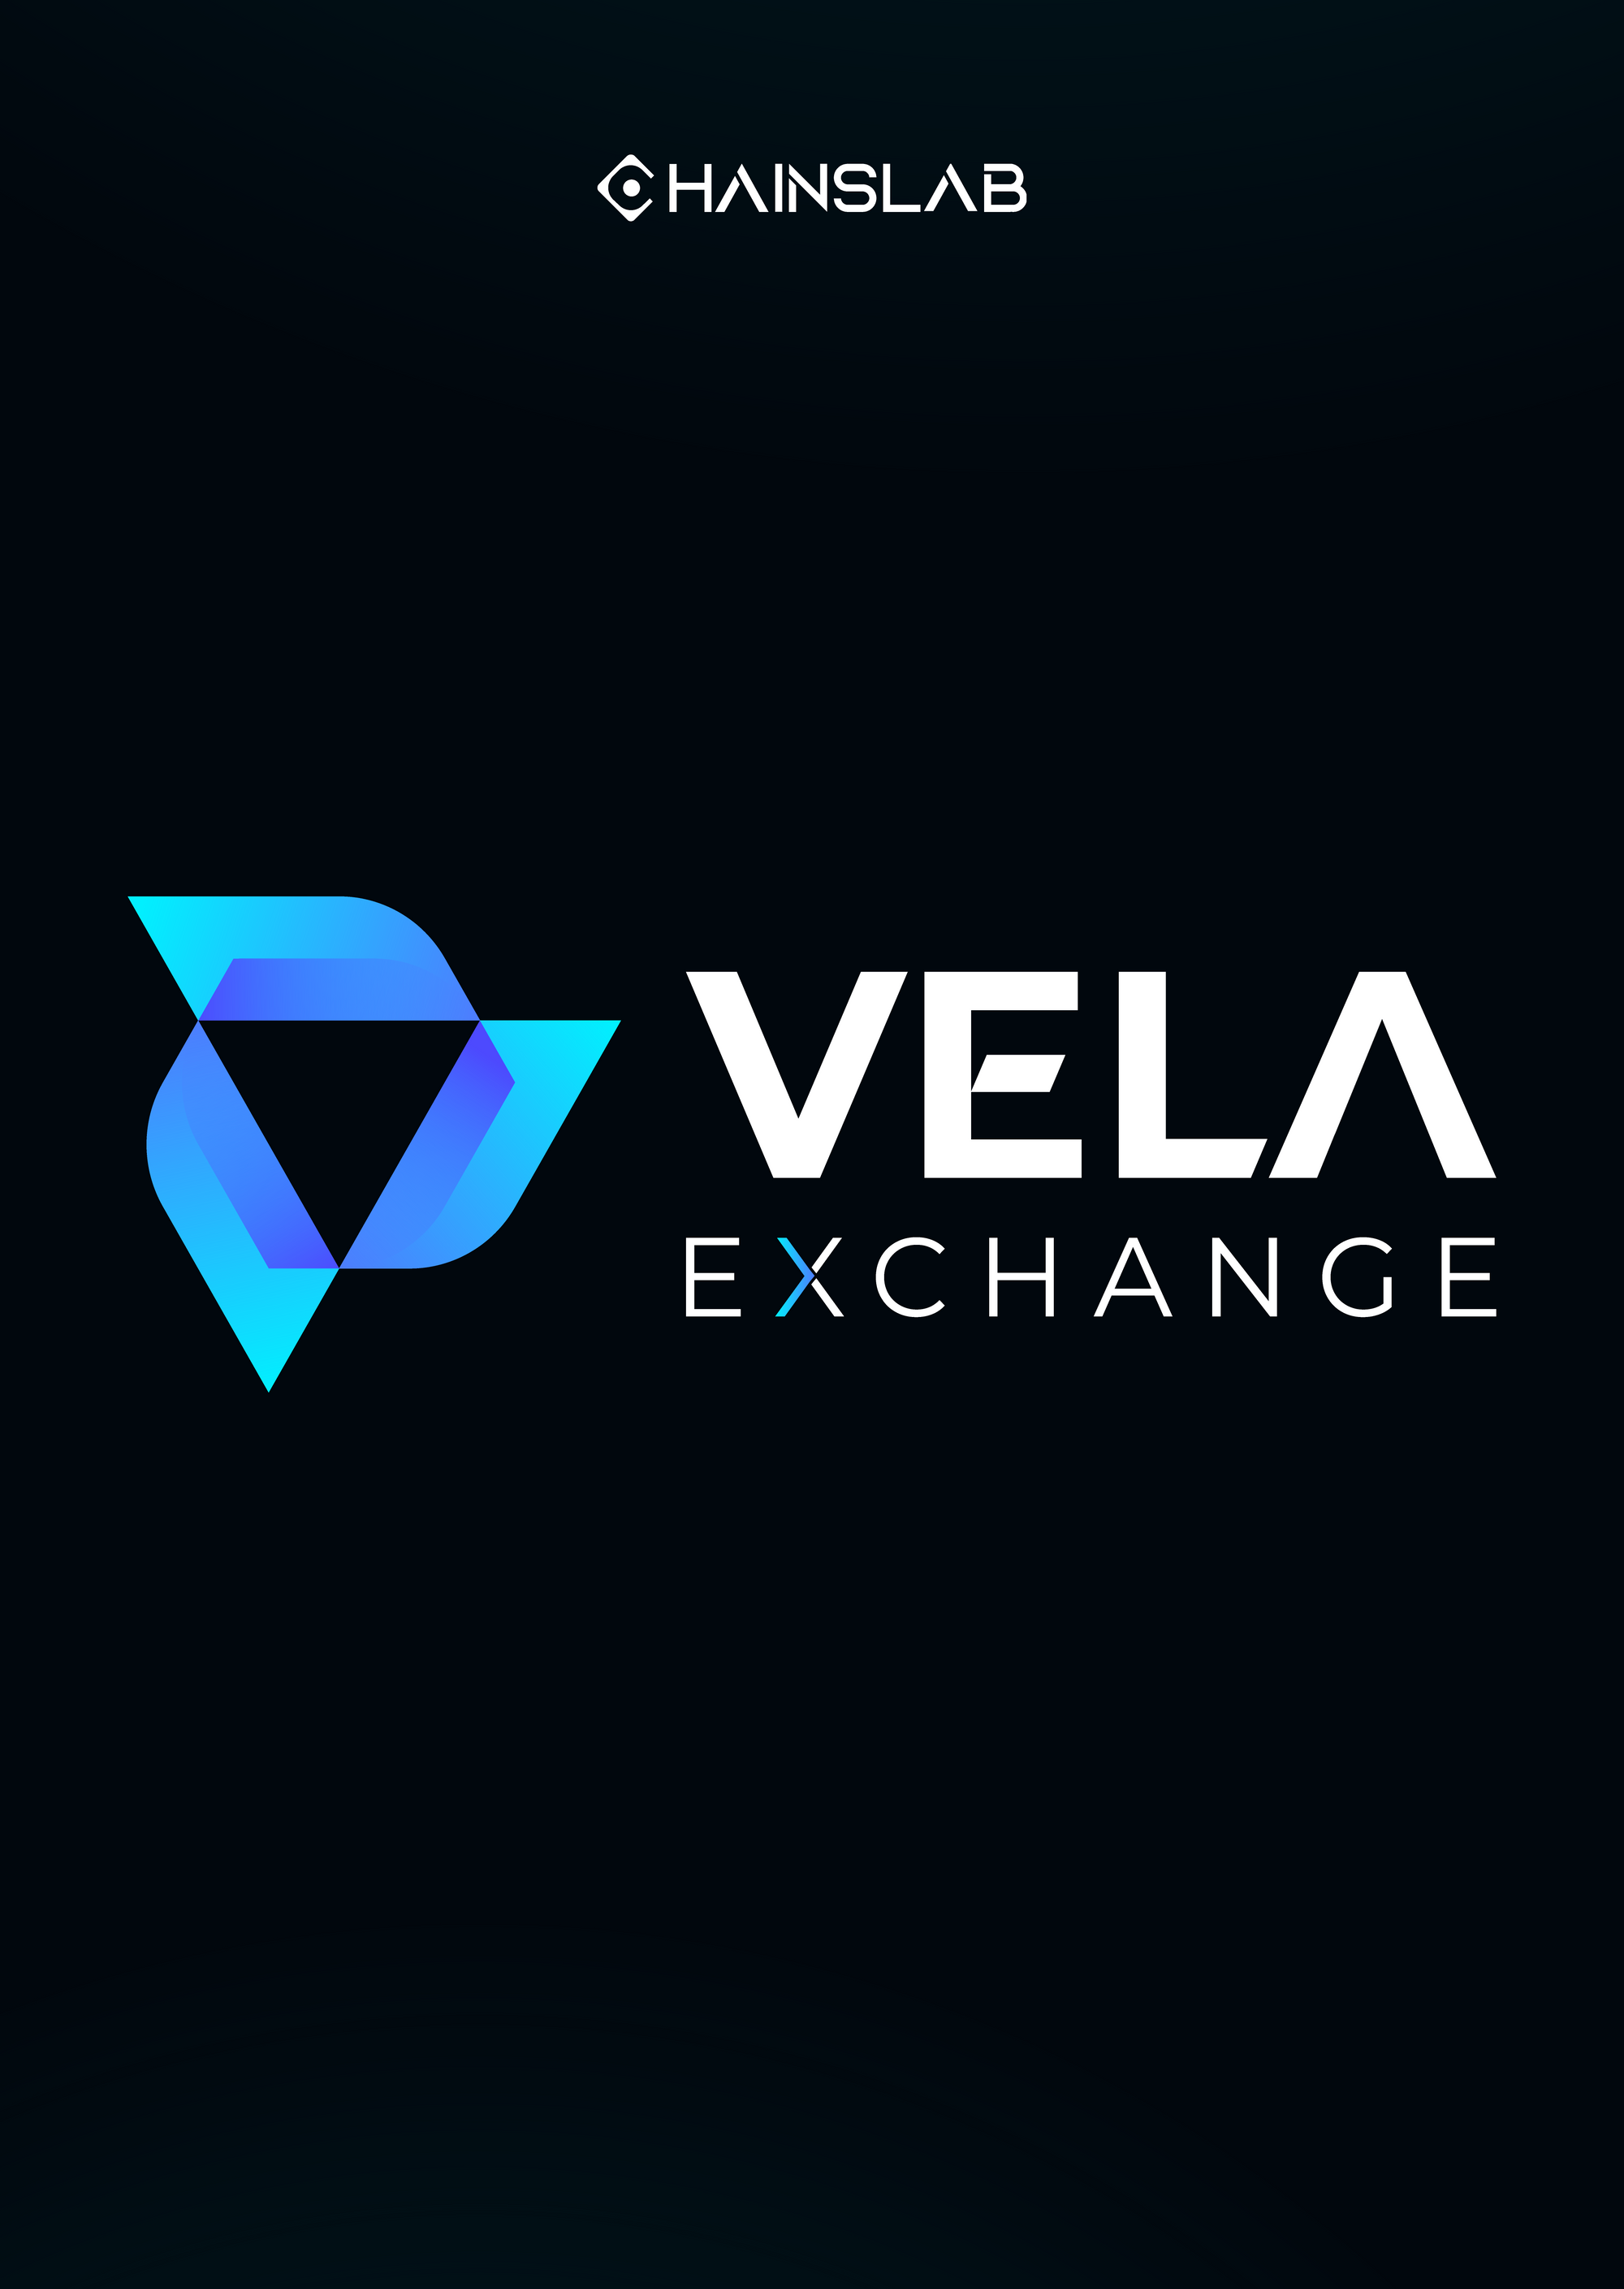 What is Vela Exchange?